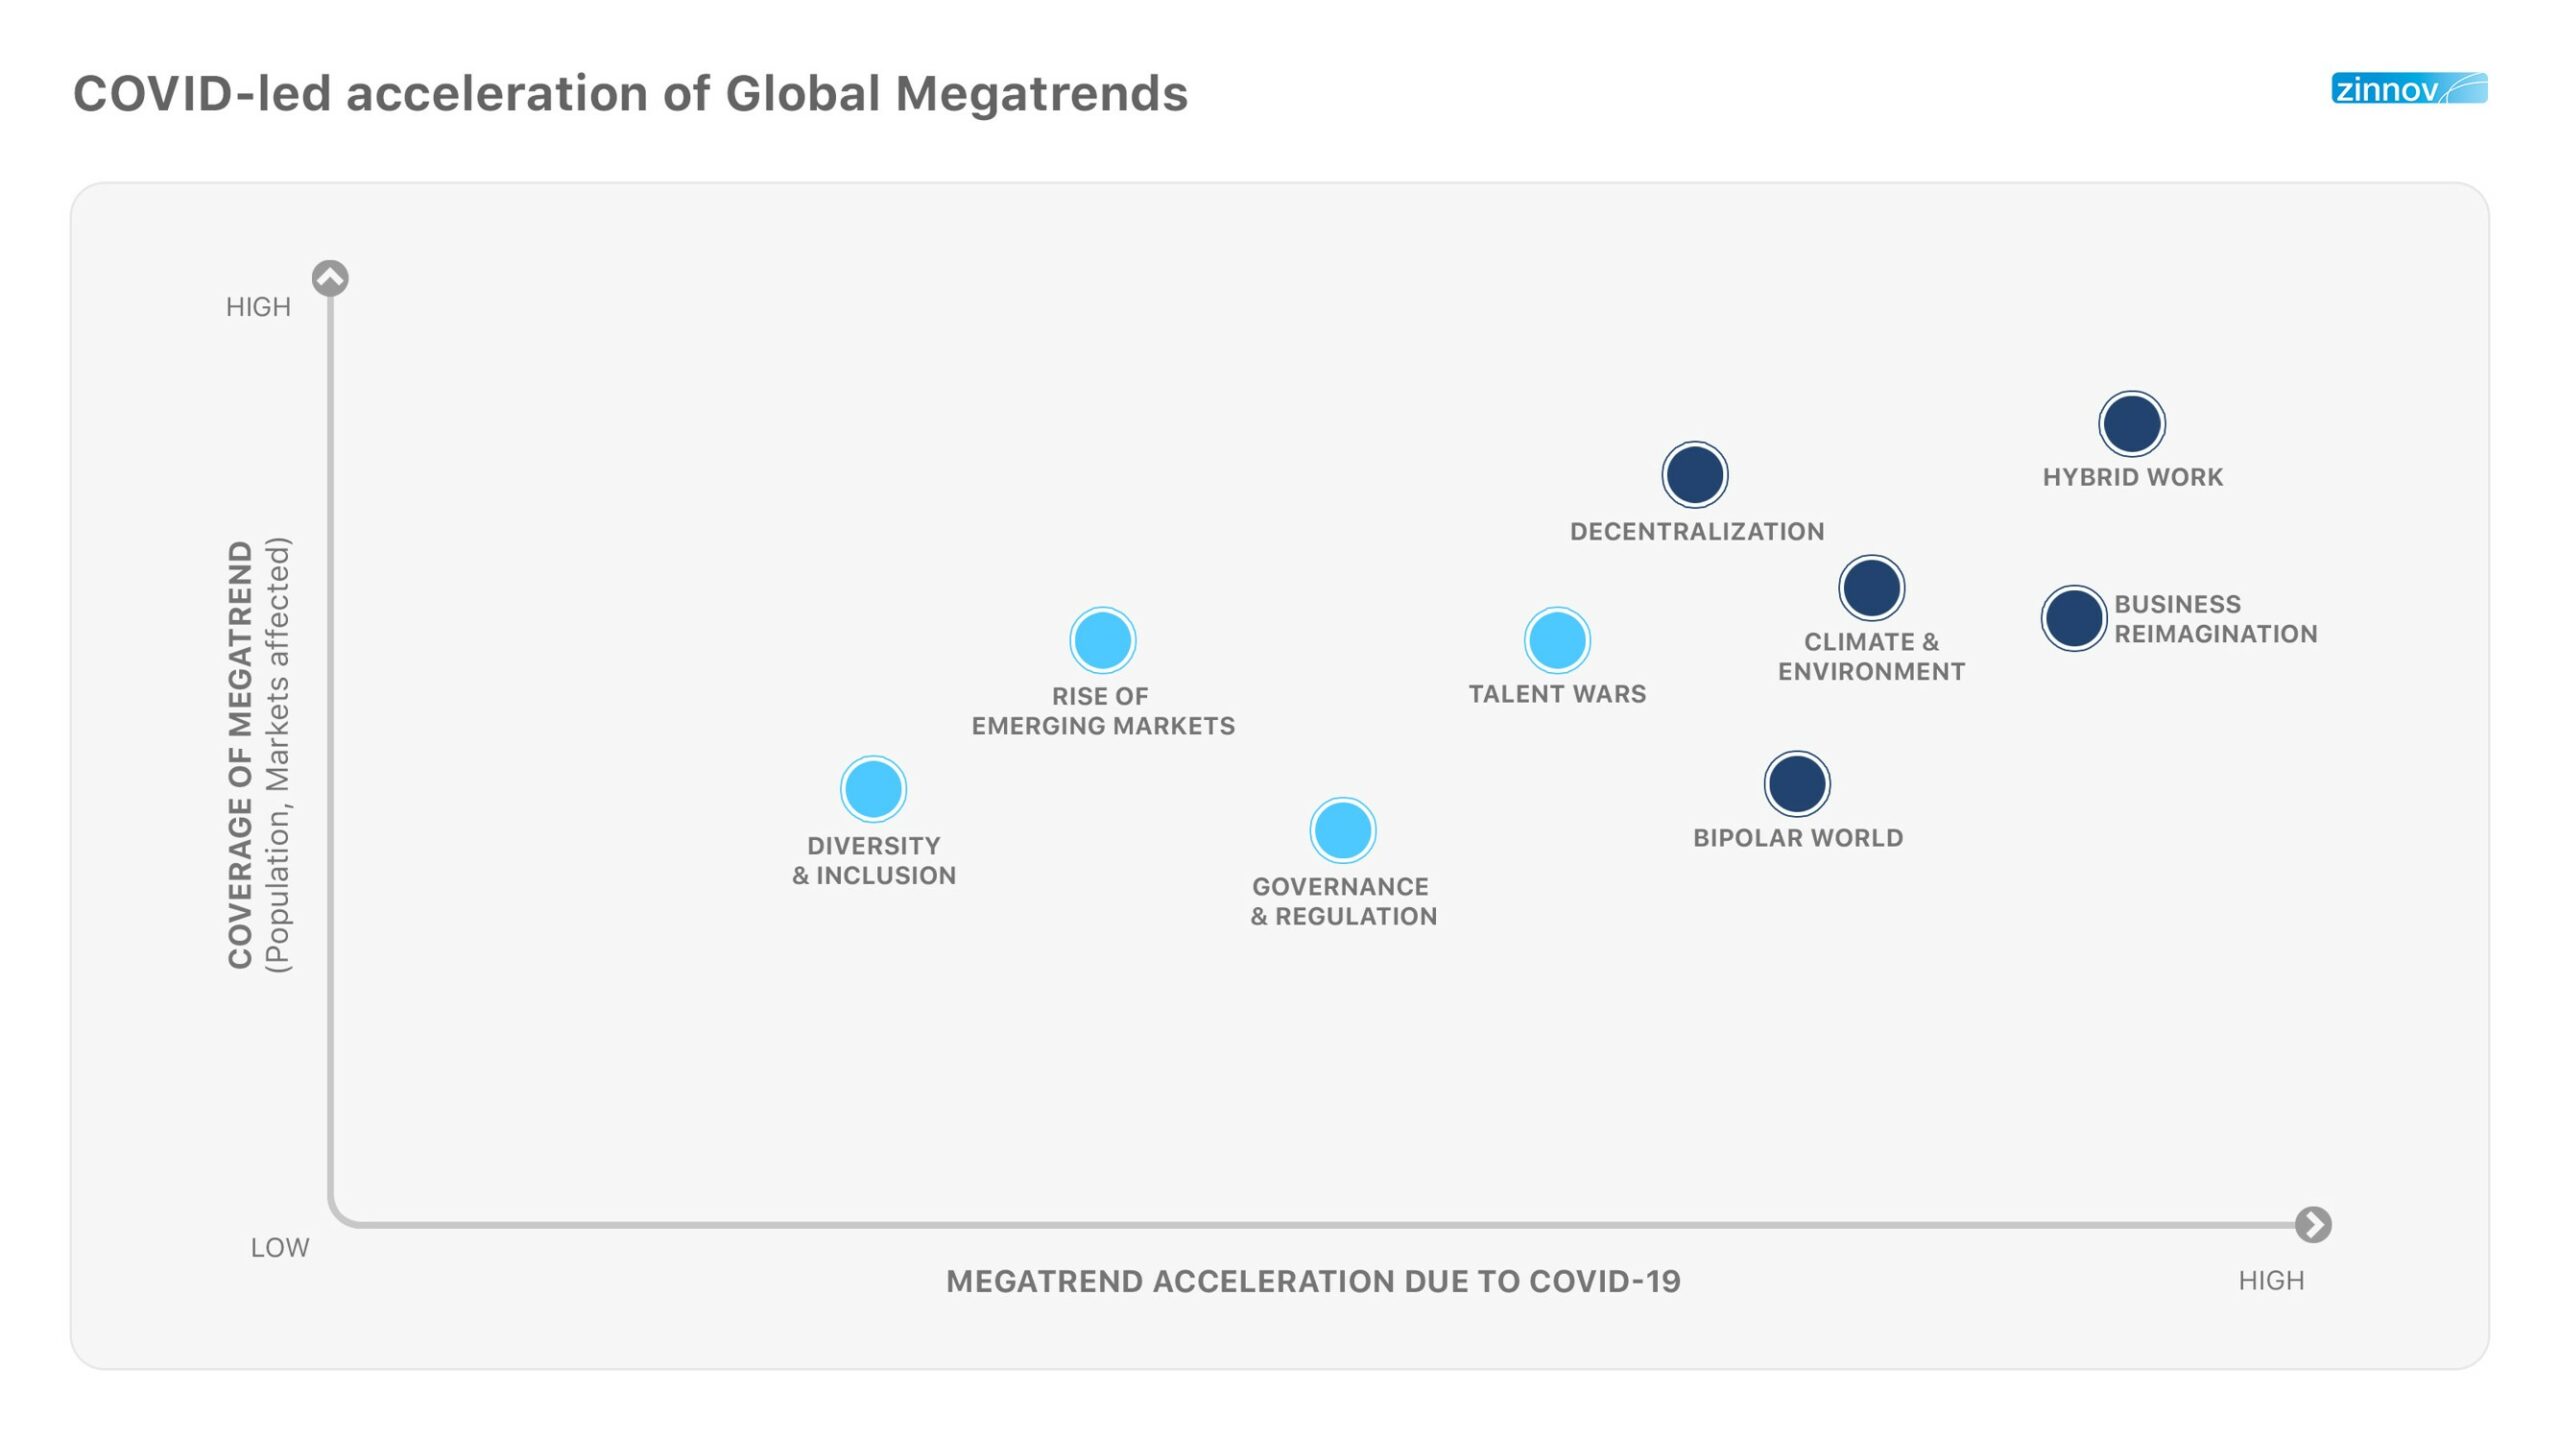 COVID-led acceleration of global megatrends 